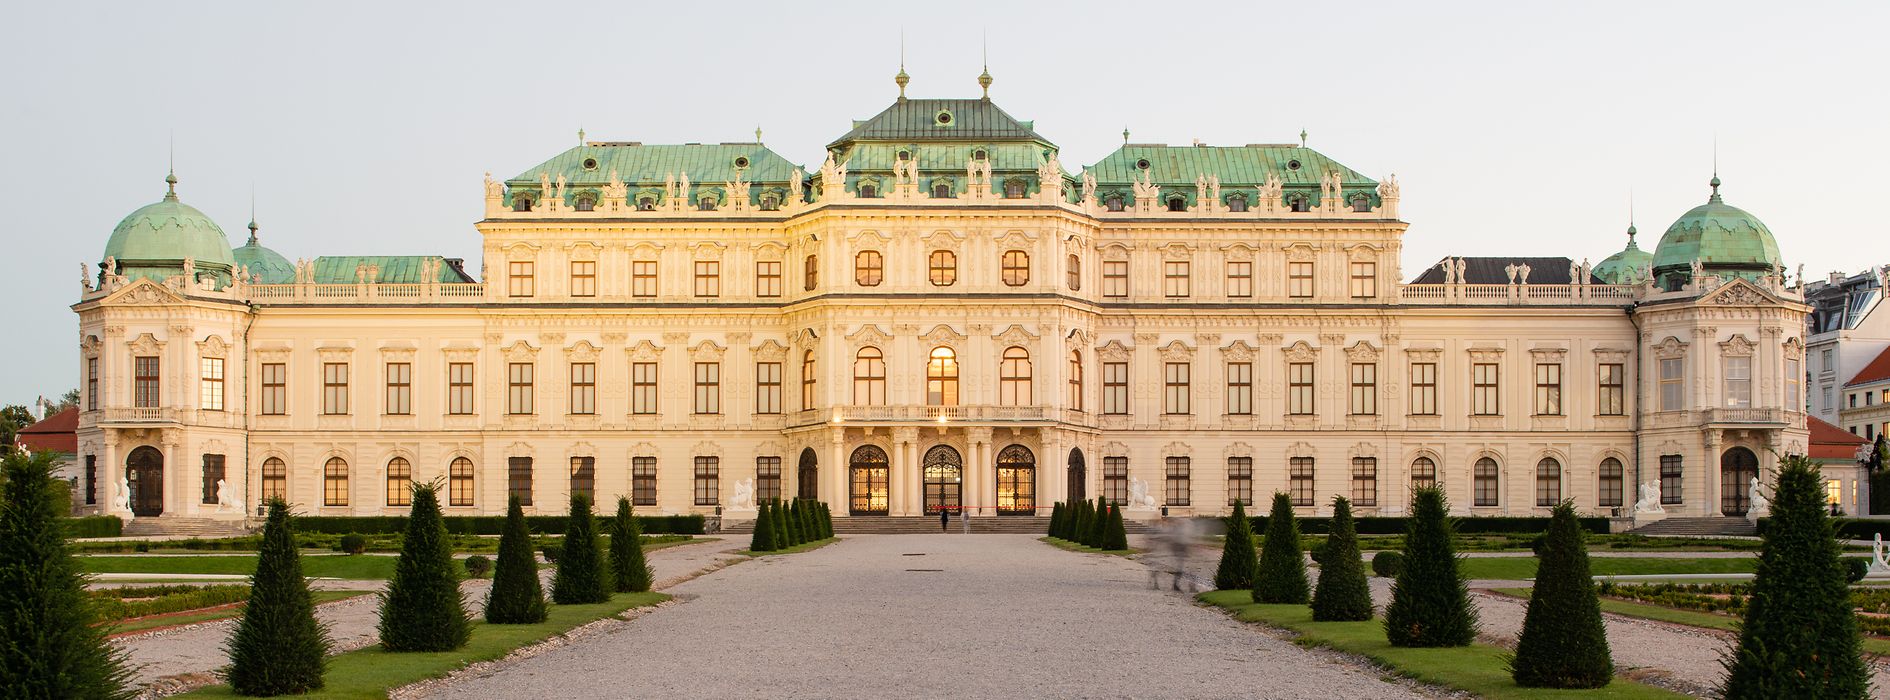 Palacio Belvedere, Viena